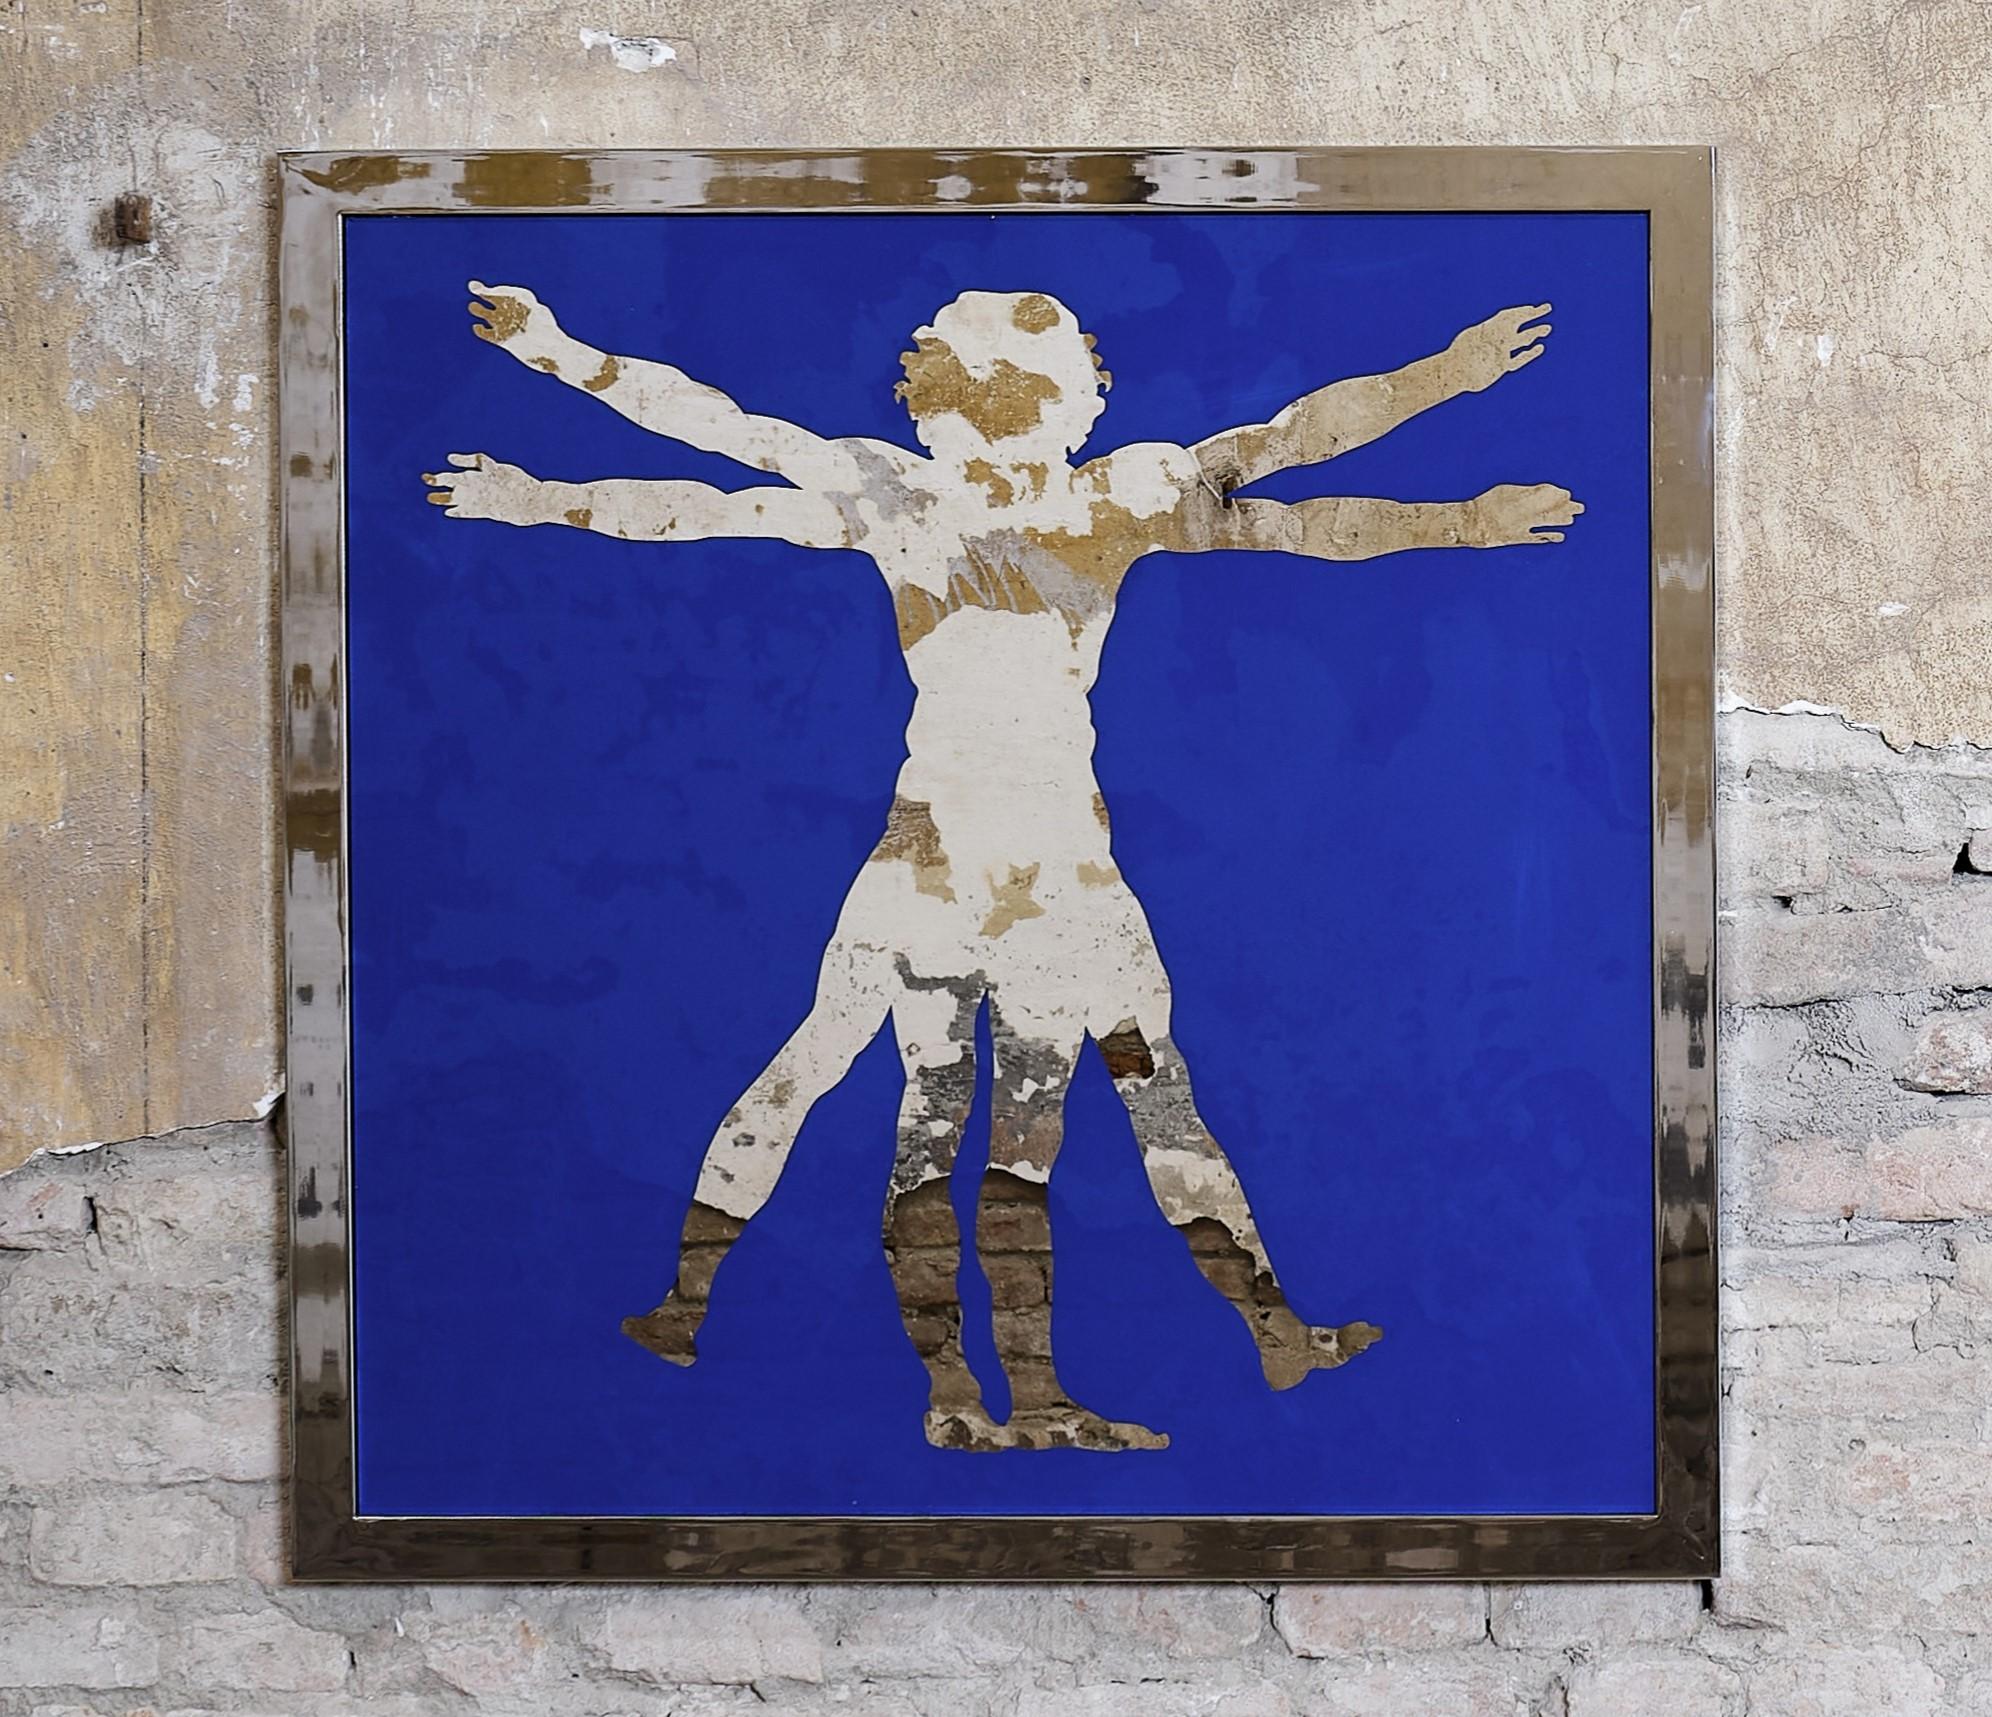 Small Leonardo Da Vinci, The Vitruvian Man, Icon Wall Decoration by Davide Medri
Dimensions: D 10 x W 88 x H 88 cm.
Materials: Golden mirror, metal structure.
Available in different colors and sizes.

Davide Medri was born in Cesena on August 7th